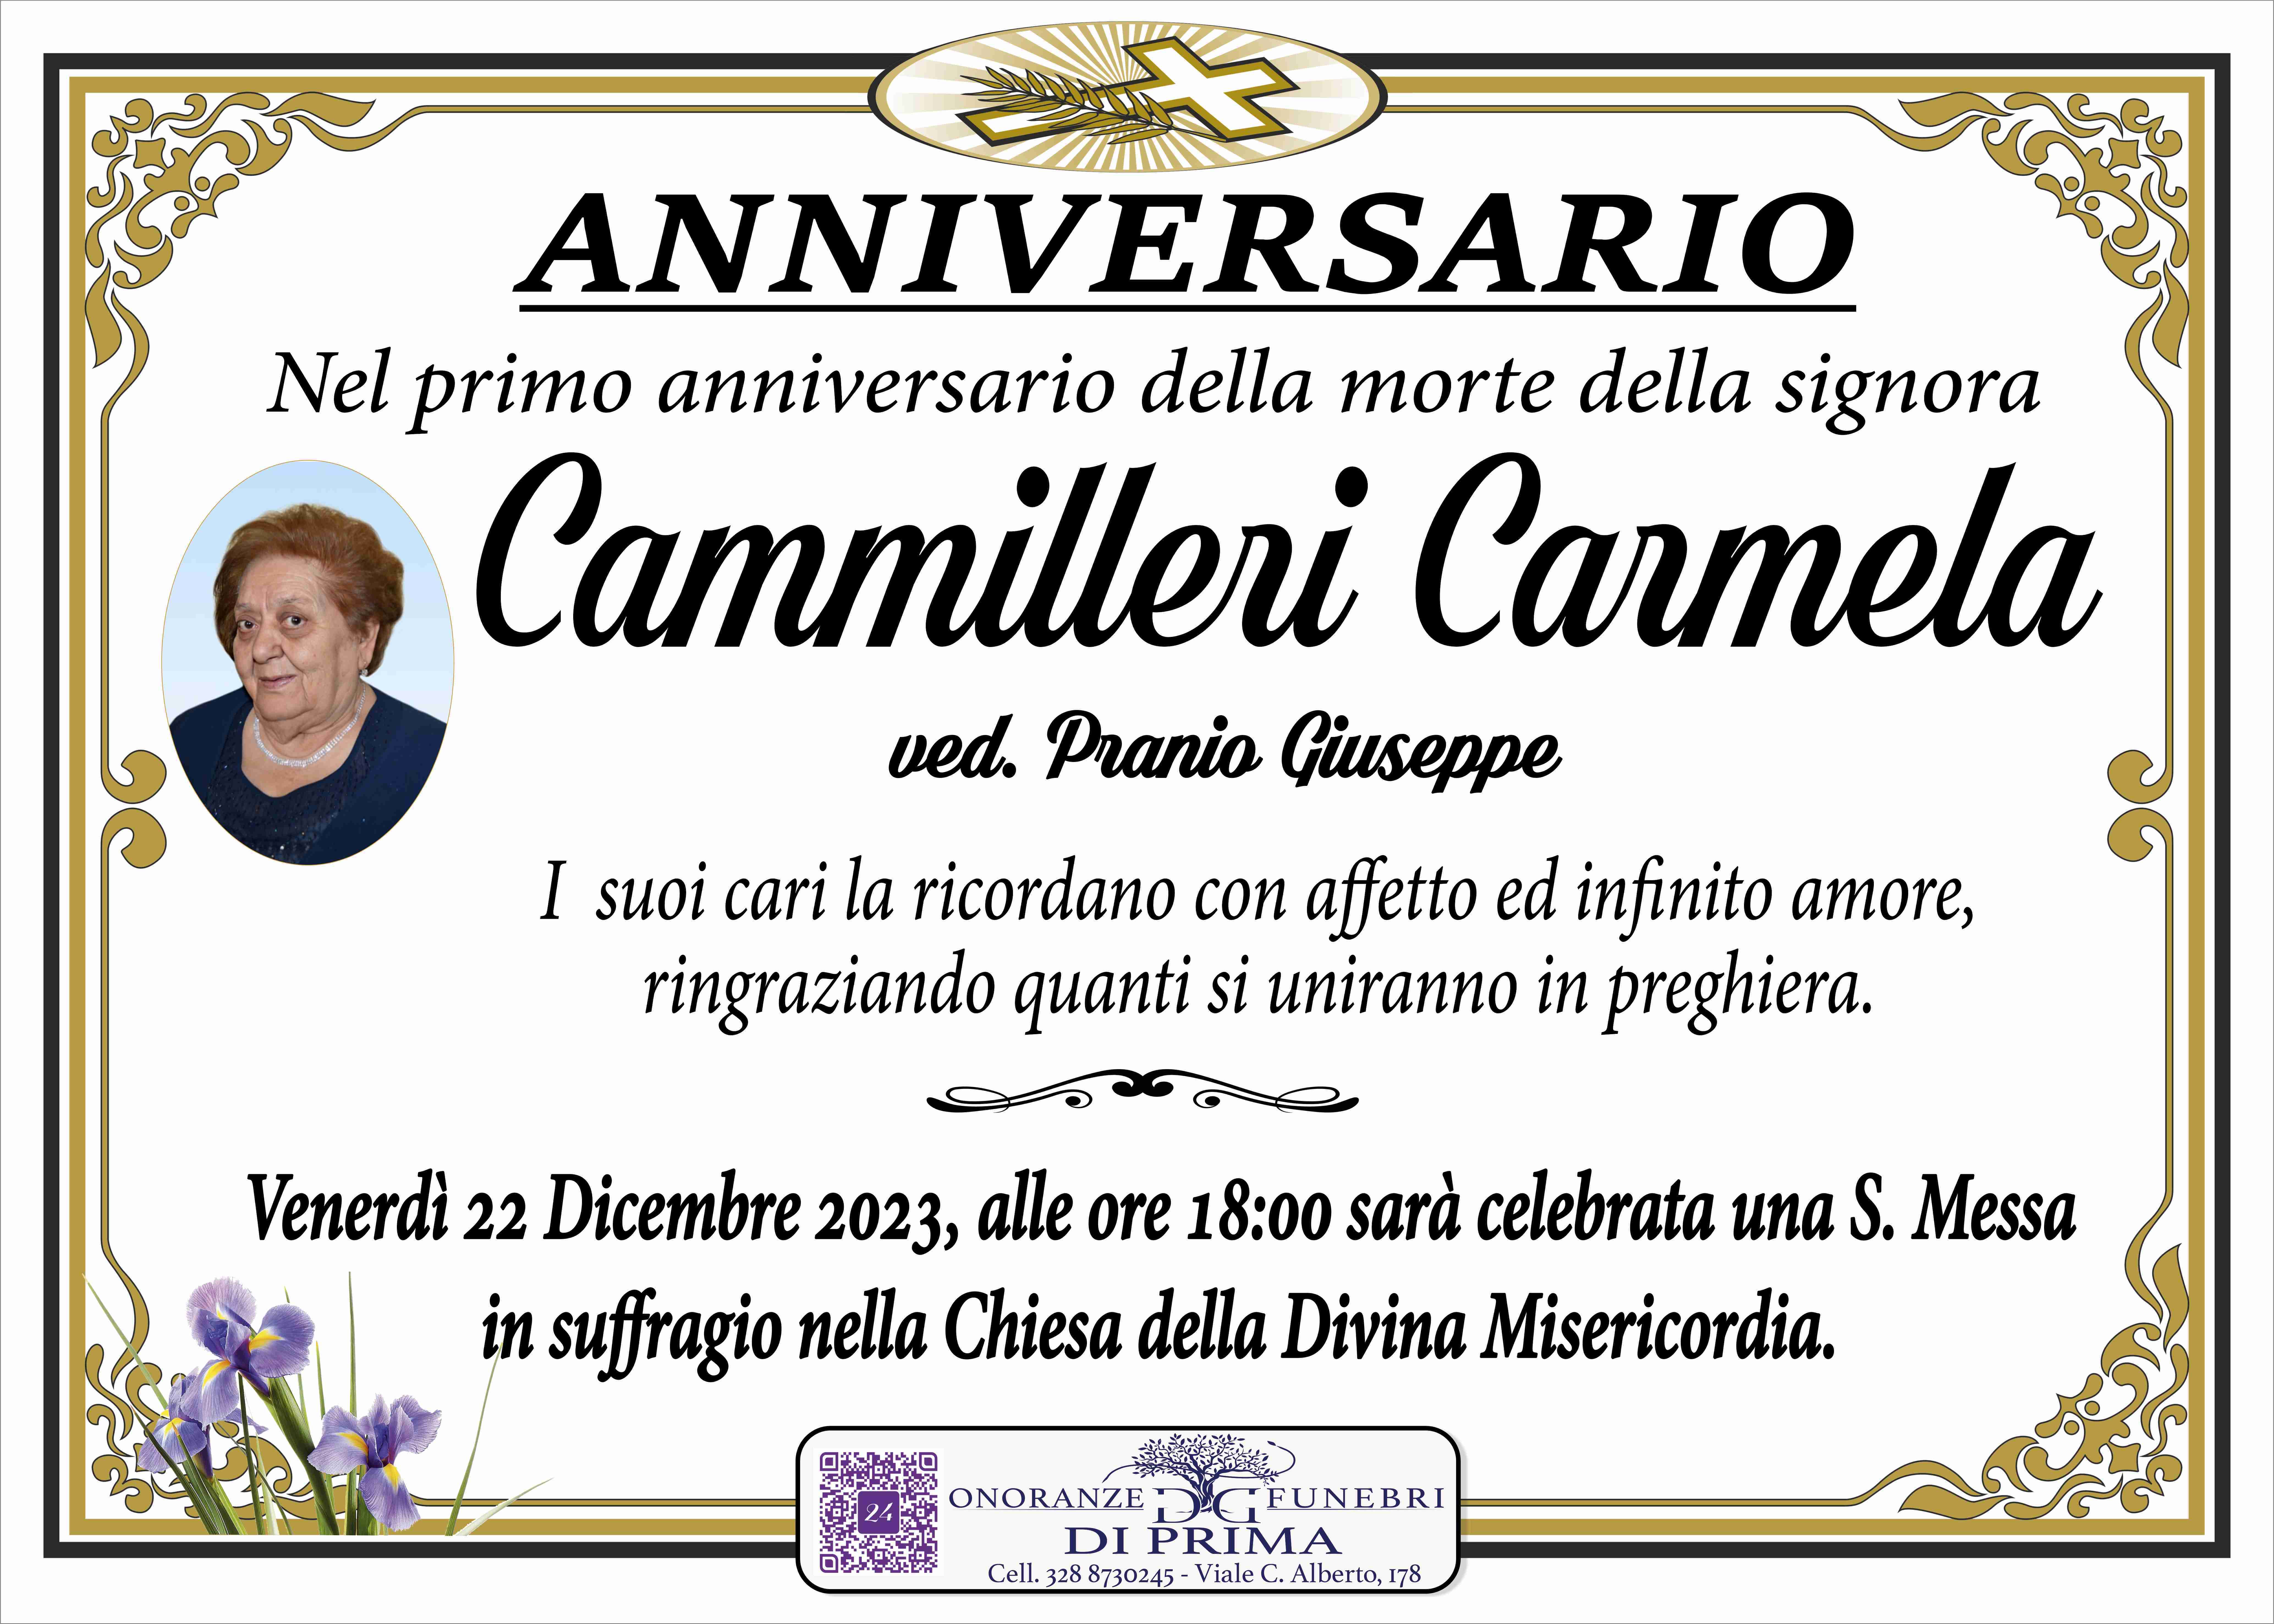 Carmela Cammilleri